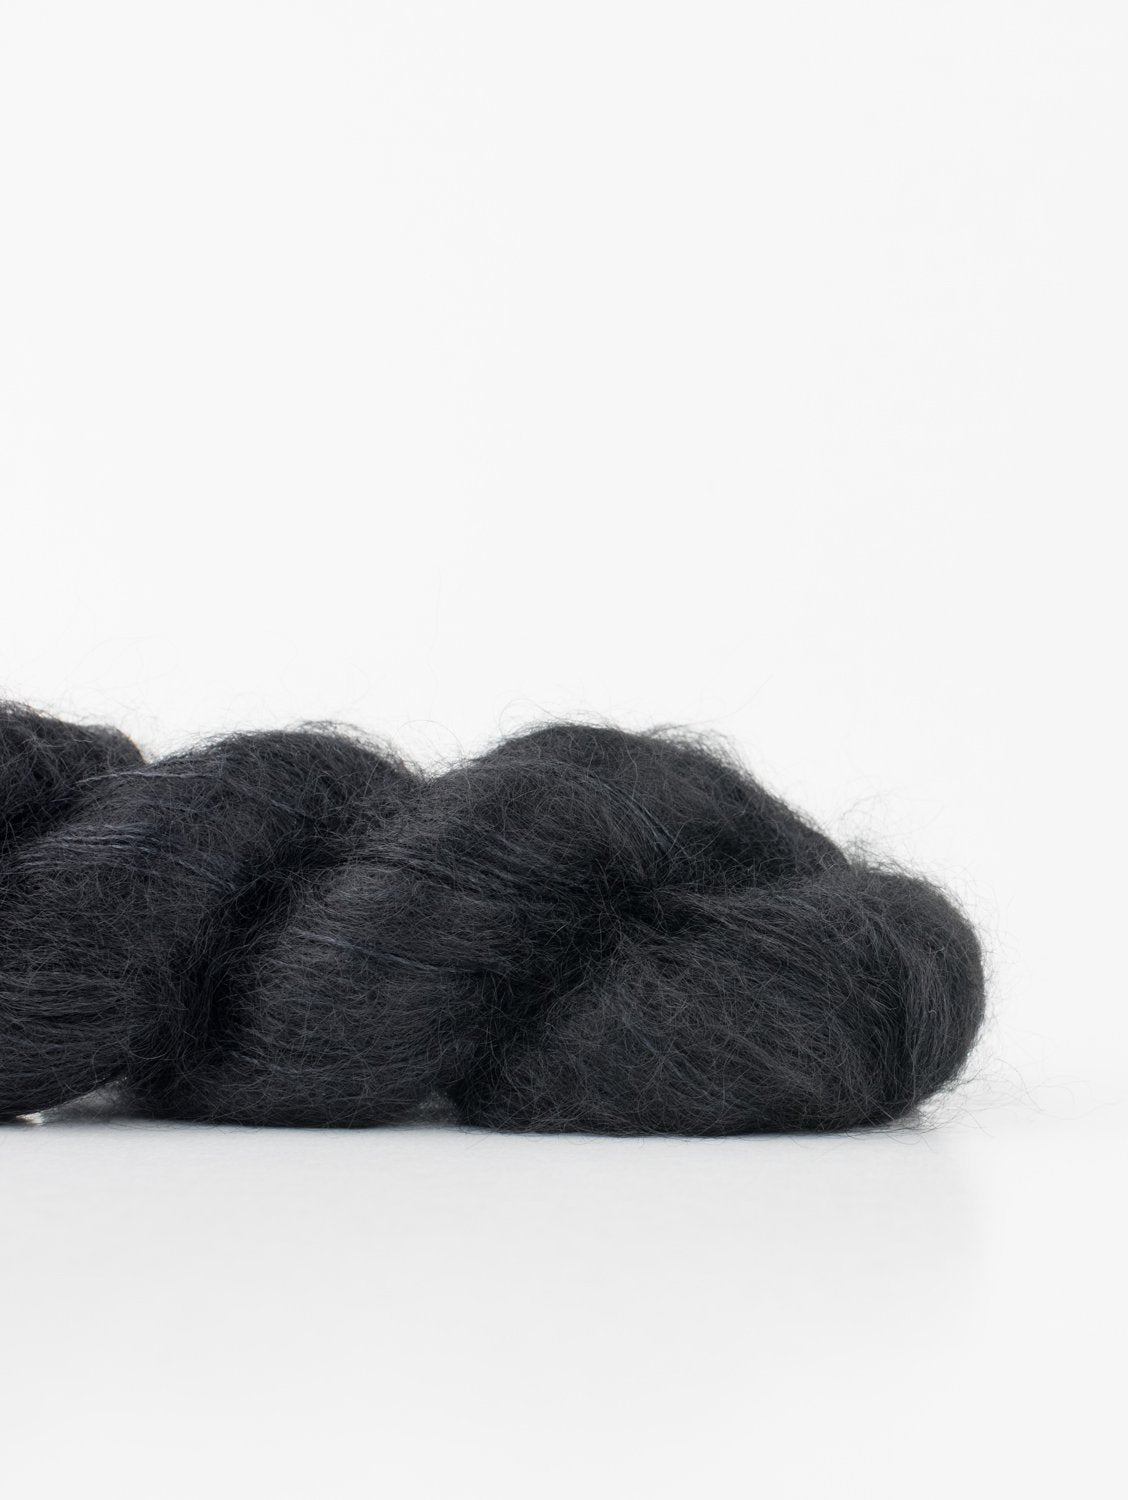 Shibui Silk Cloud yarn dark grey